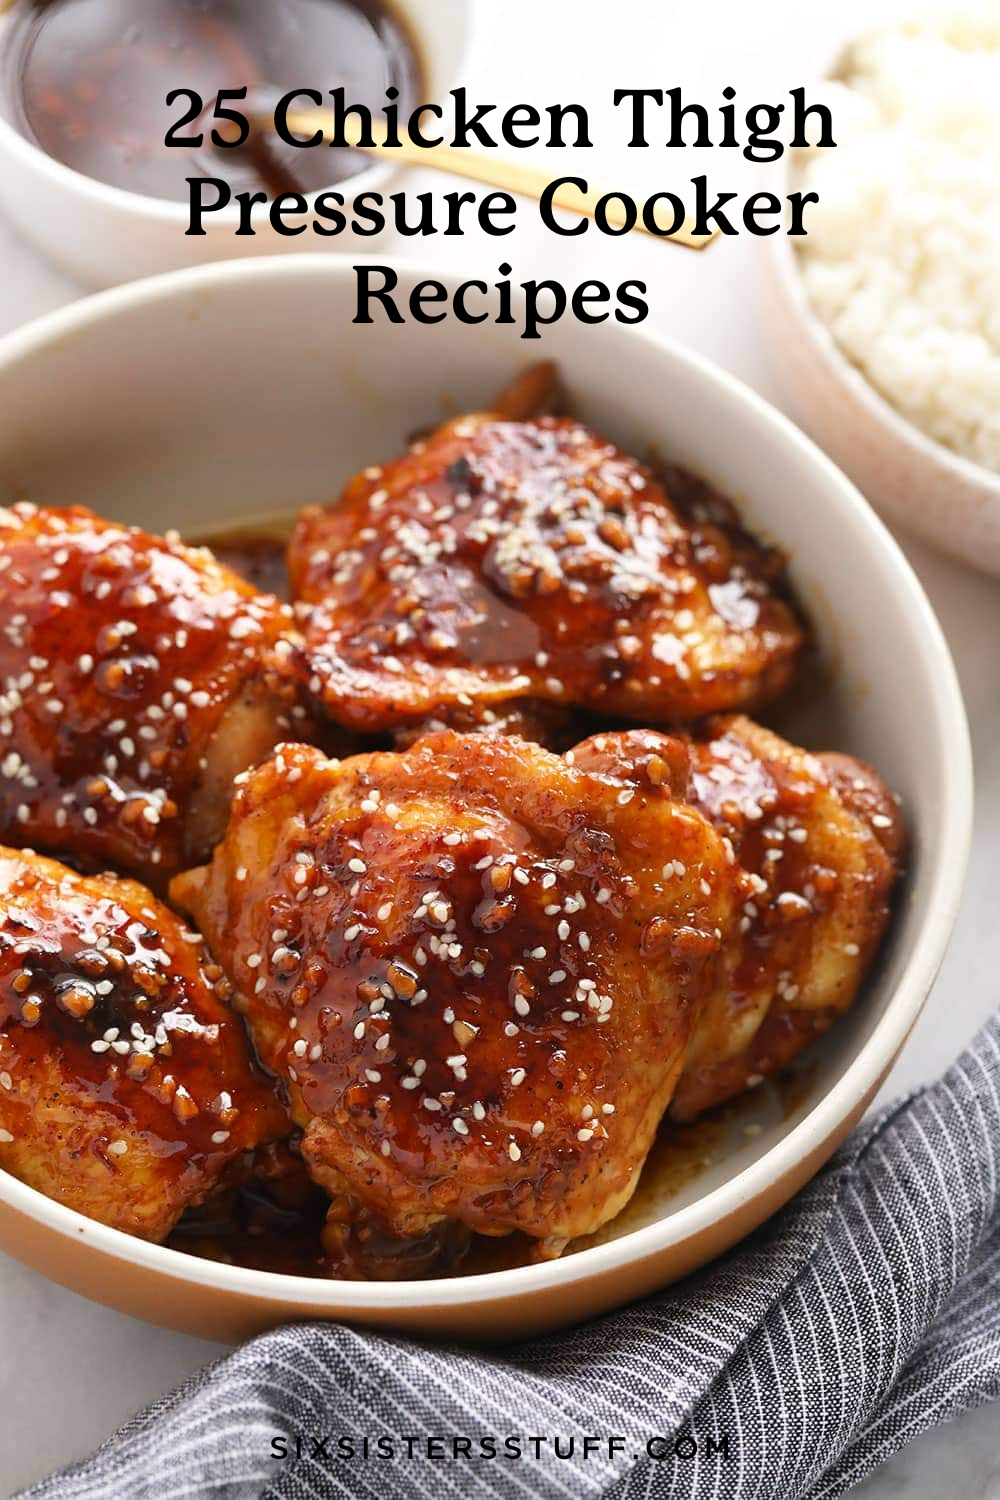 25 Chicken Thigh Pressure Cooker Recipes